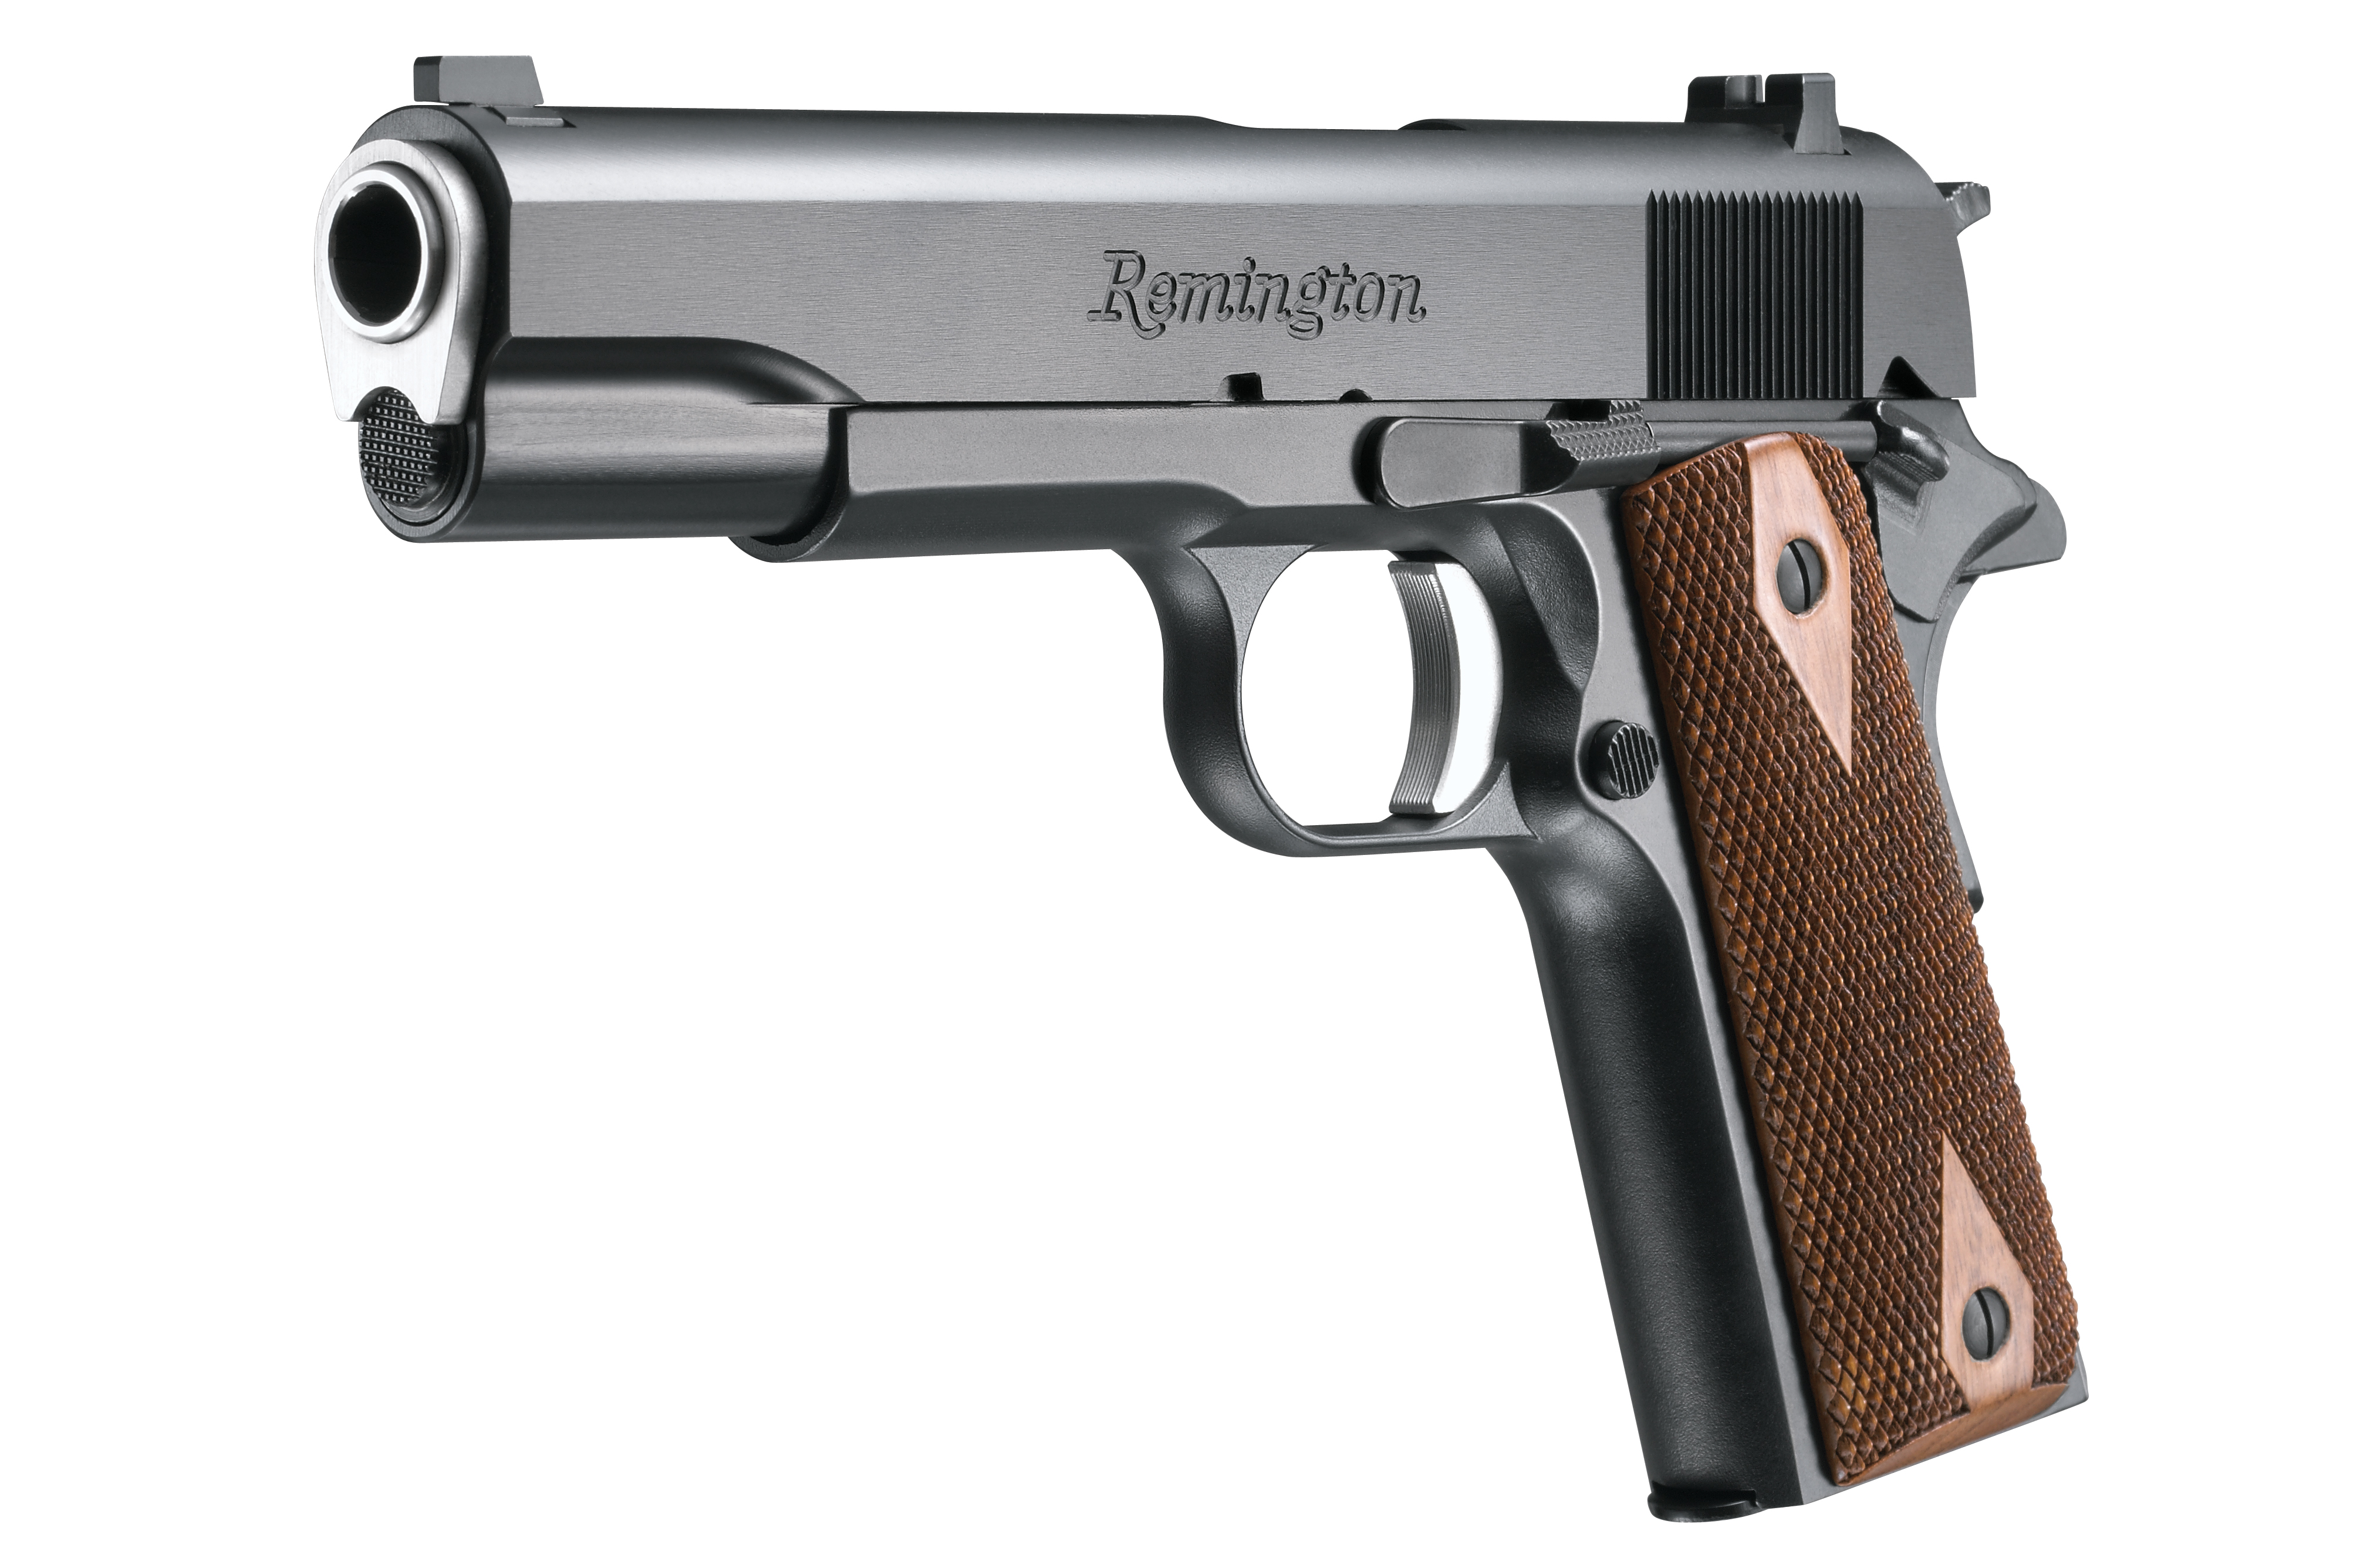 Man Made Remington Pistol 4k Ultra HD Wallpaper